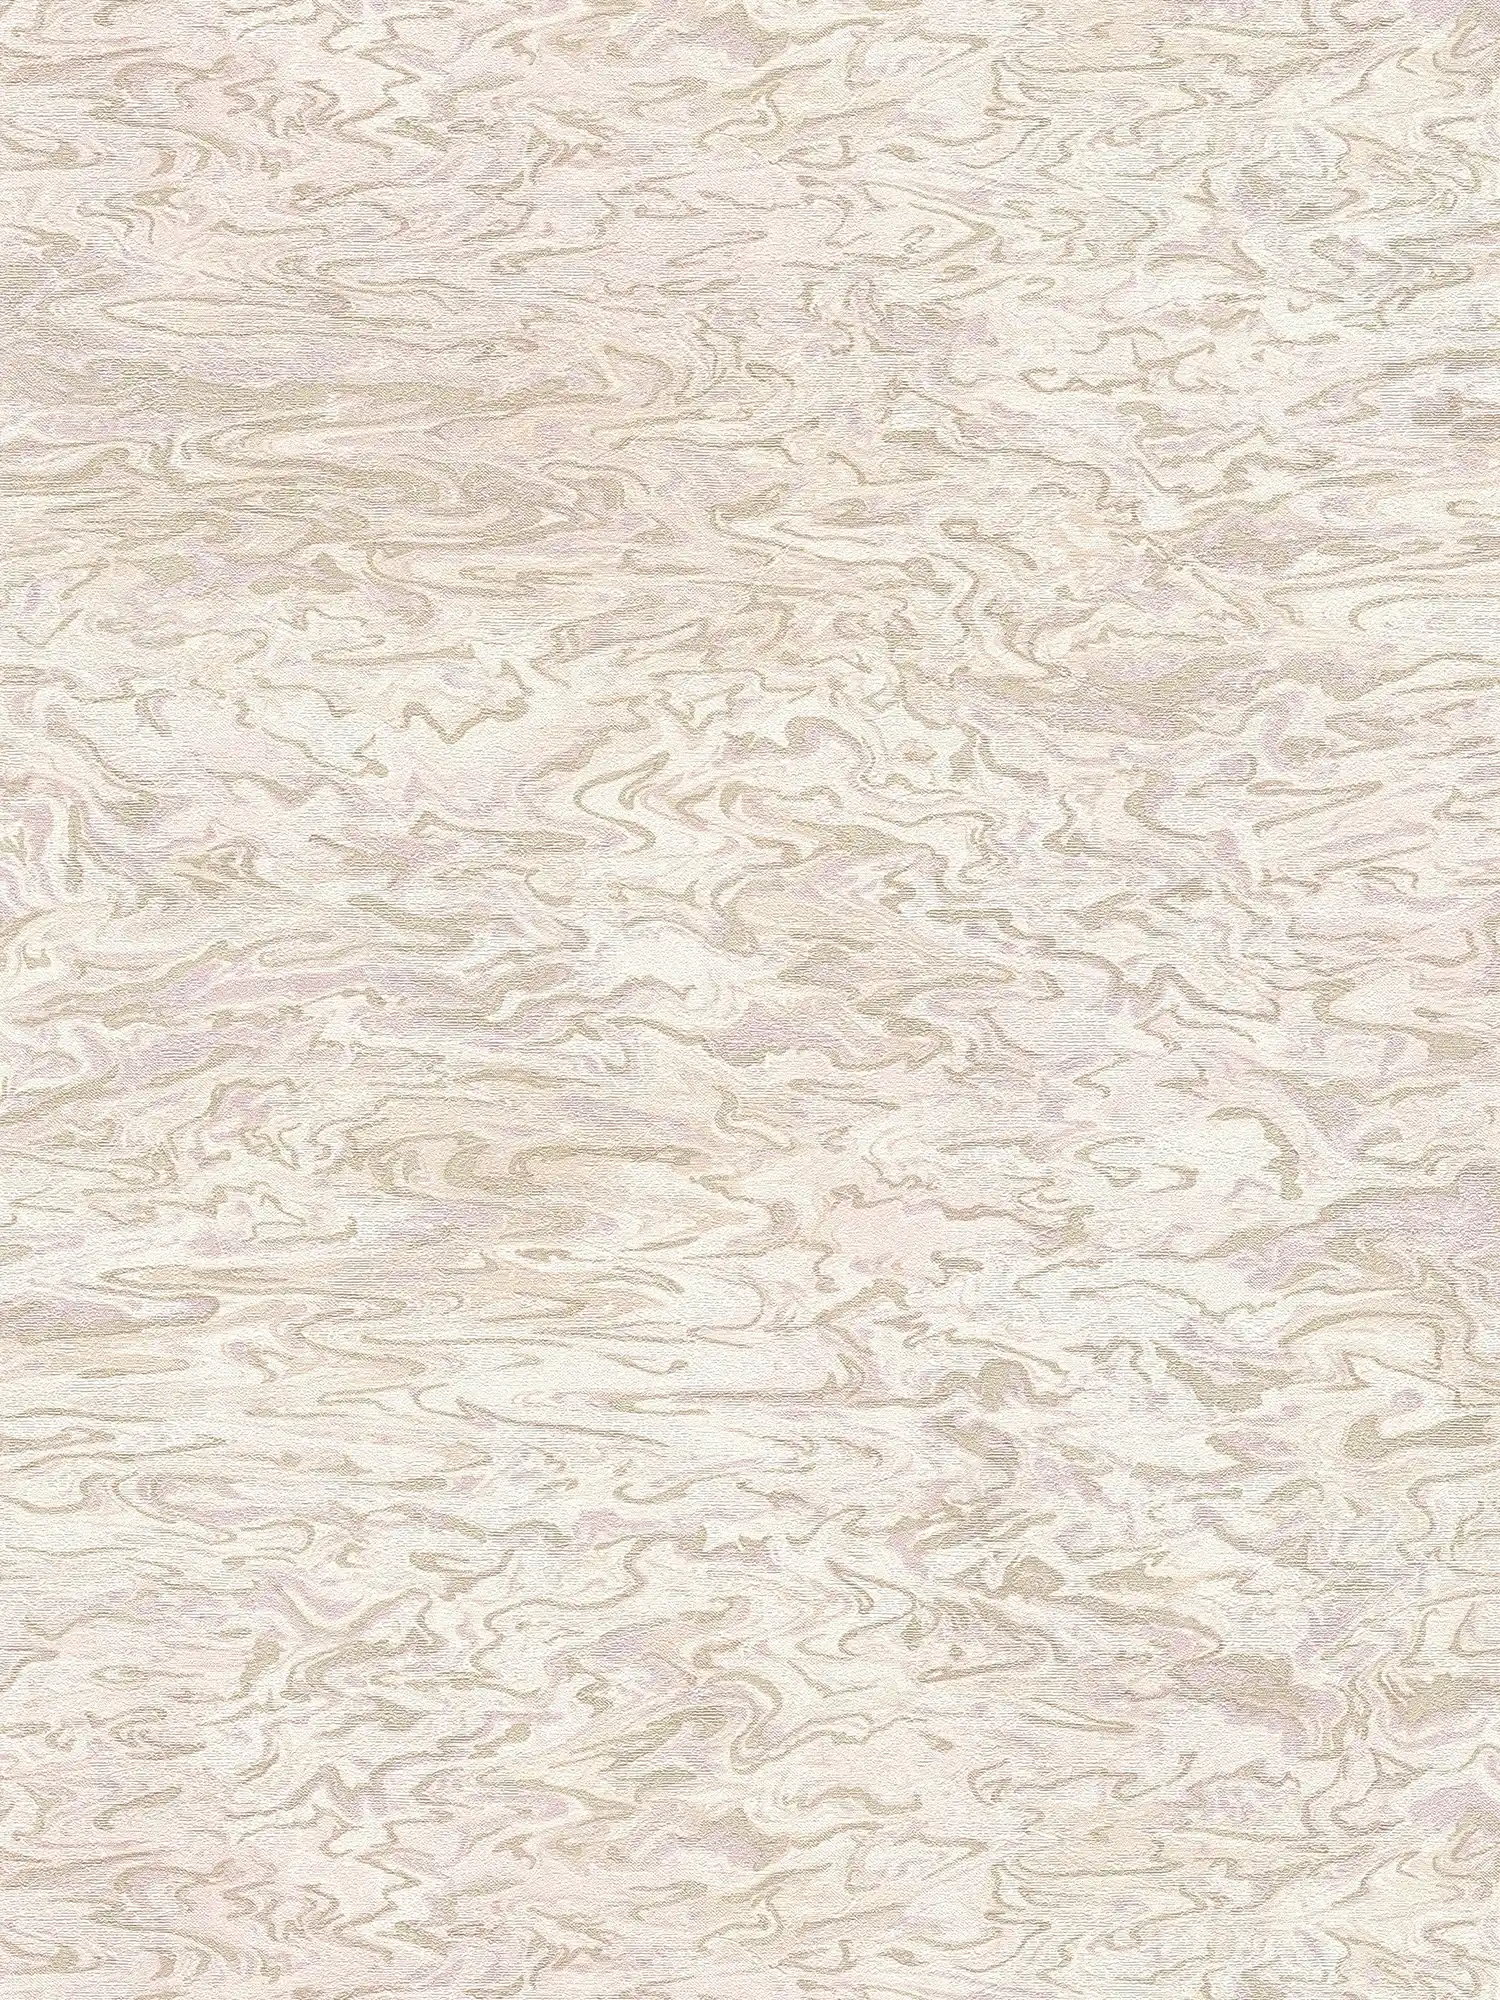         Tapete Creme-Rosa meliertes Quarz-Design – Rosa, Weiß
    